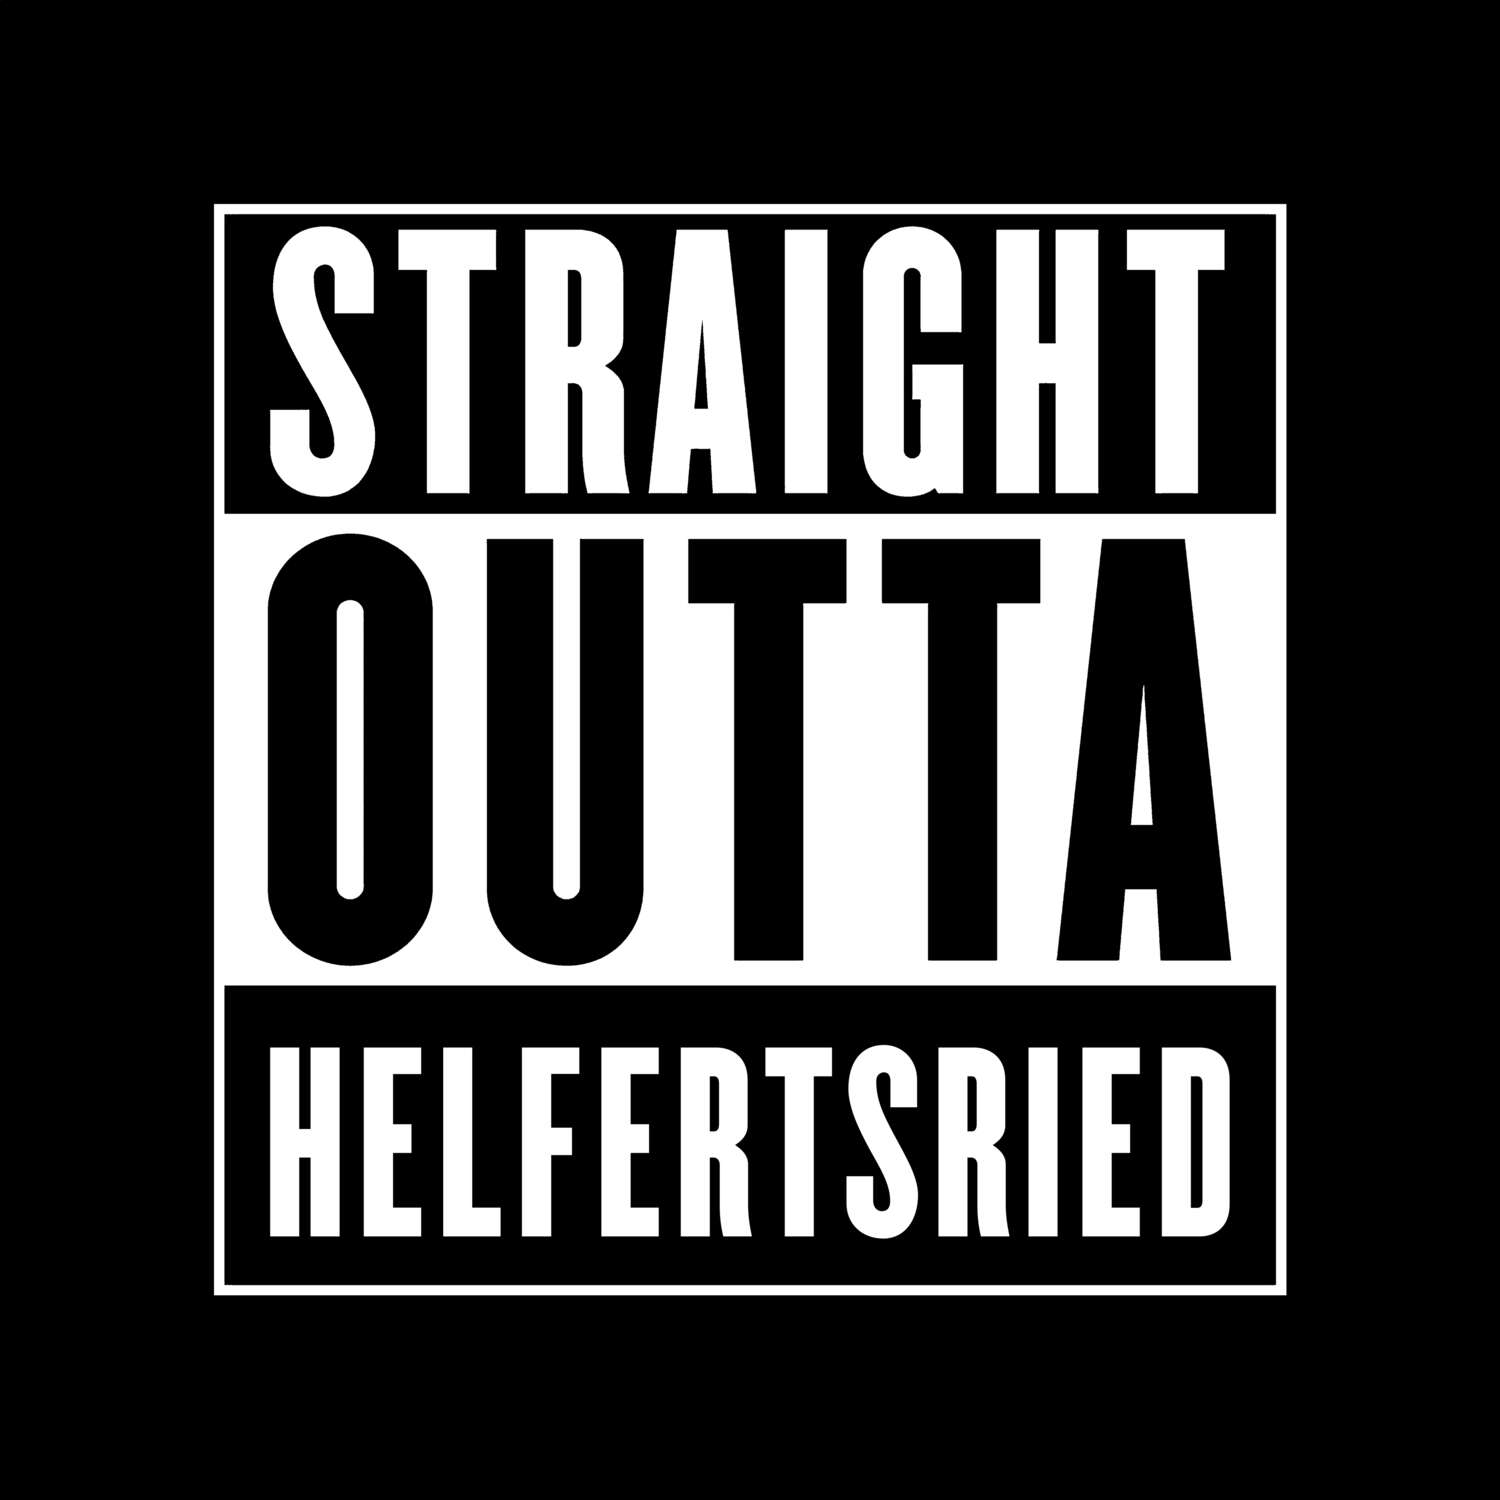 Helfertsried T-Shirt »Straight Outta«